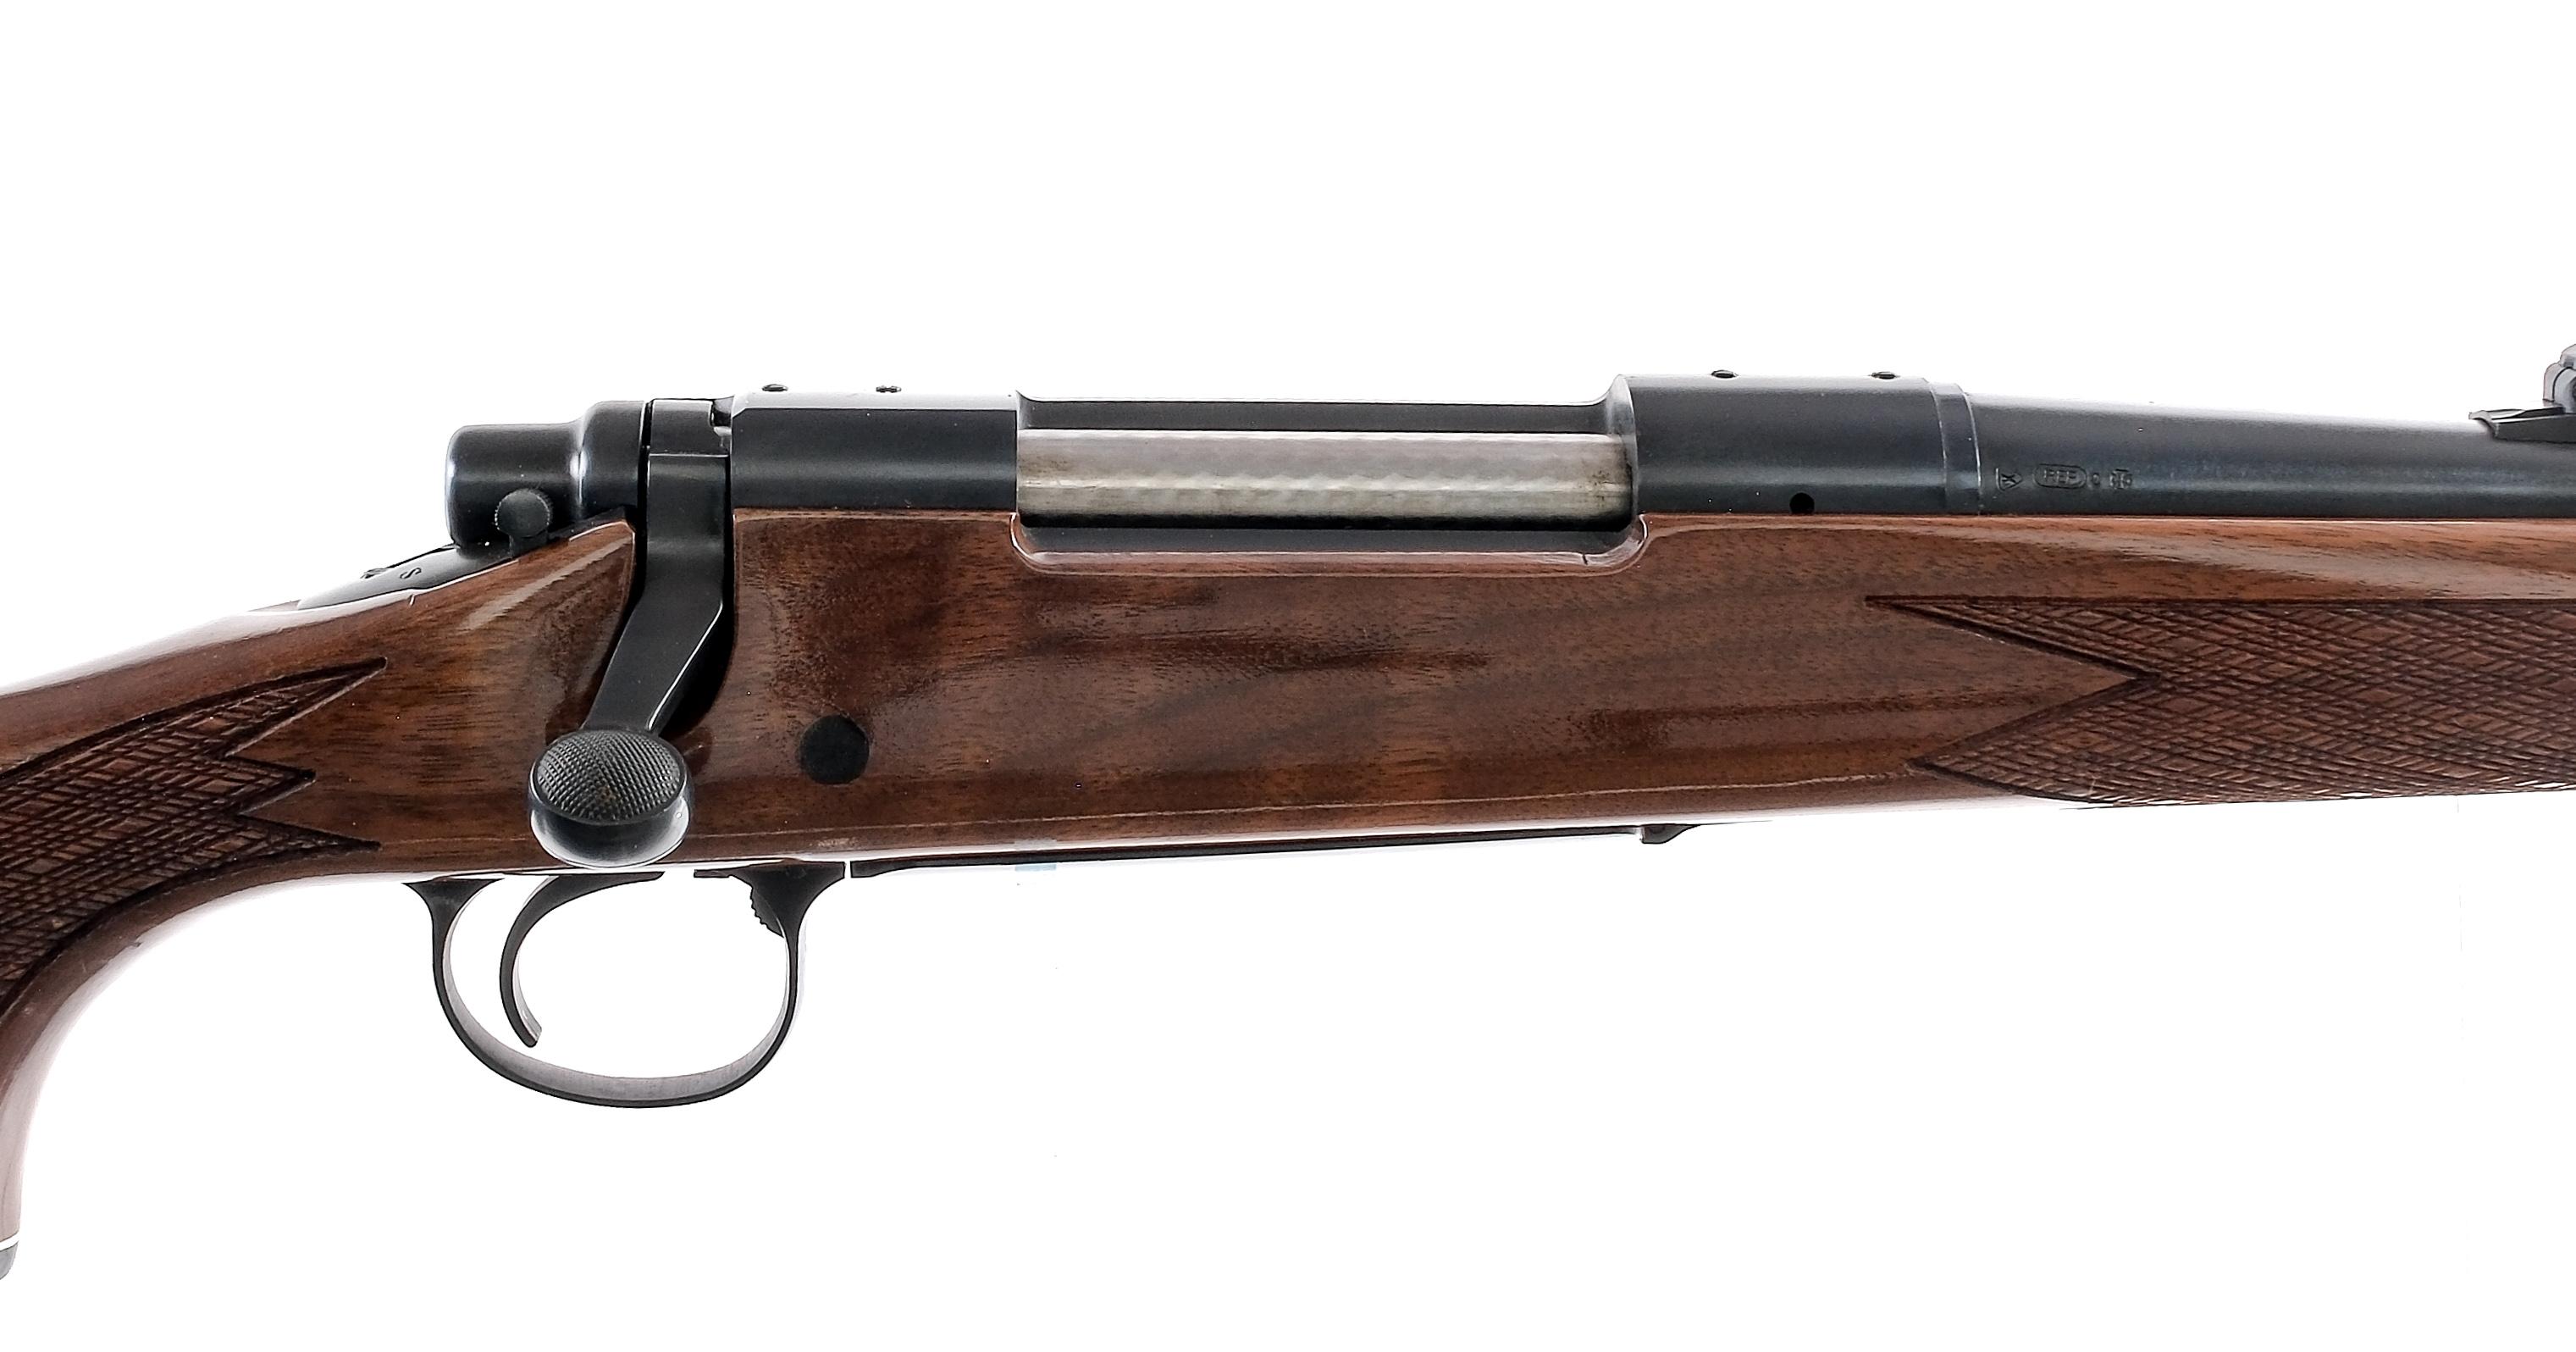 Remington 700 .30-06 Sprg Bolt Action Rifle